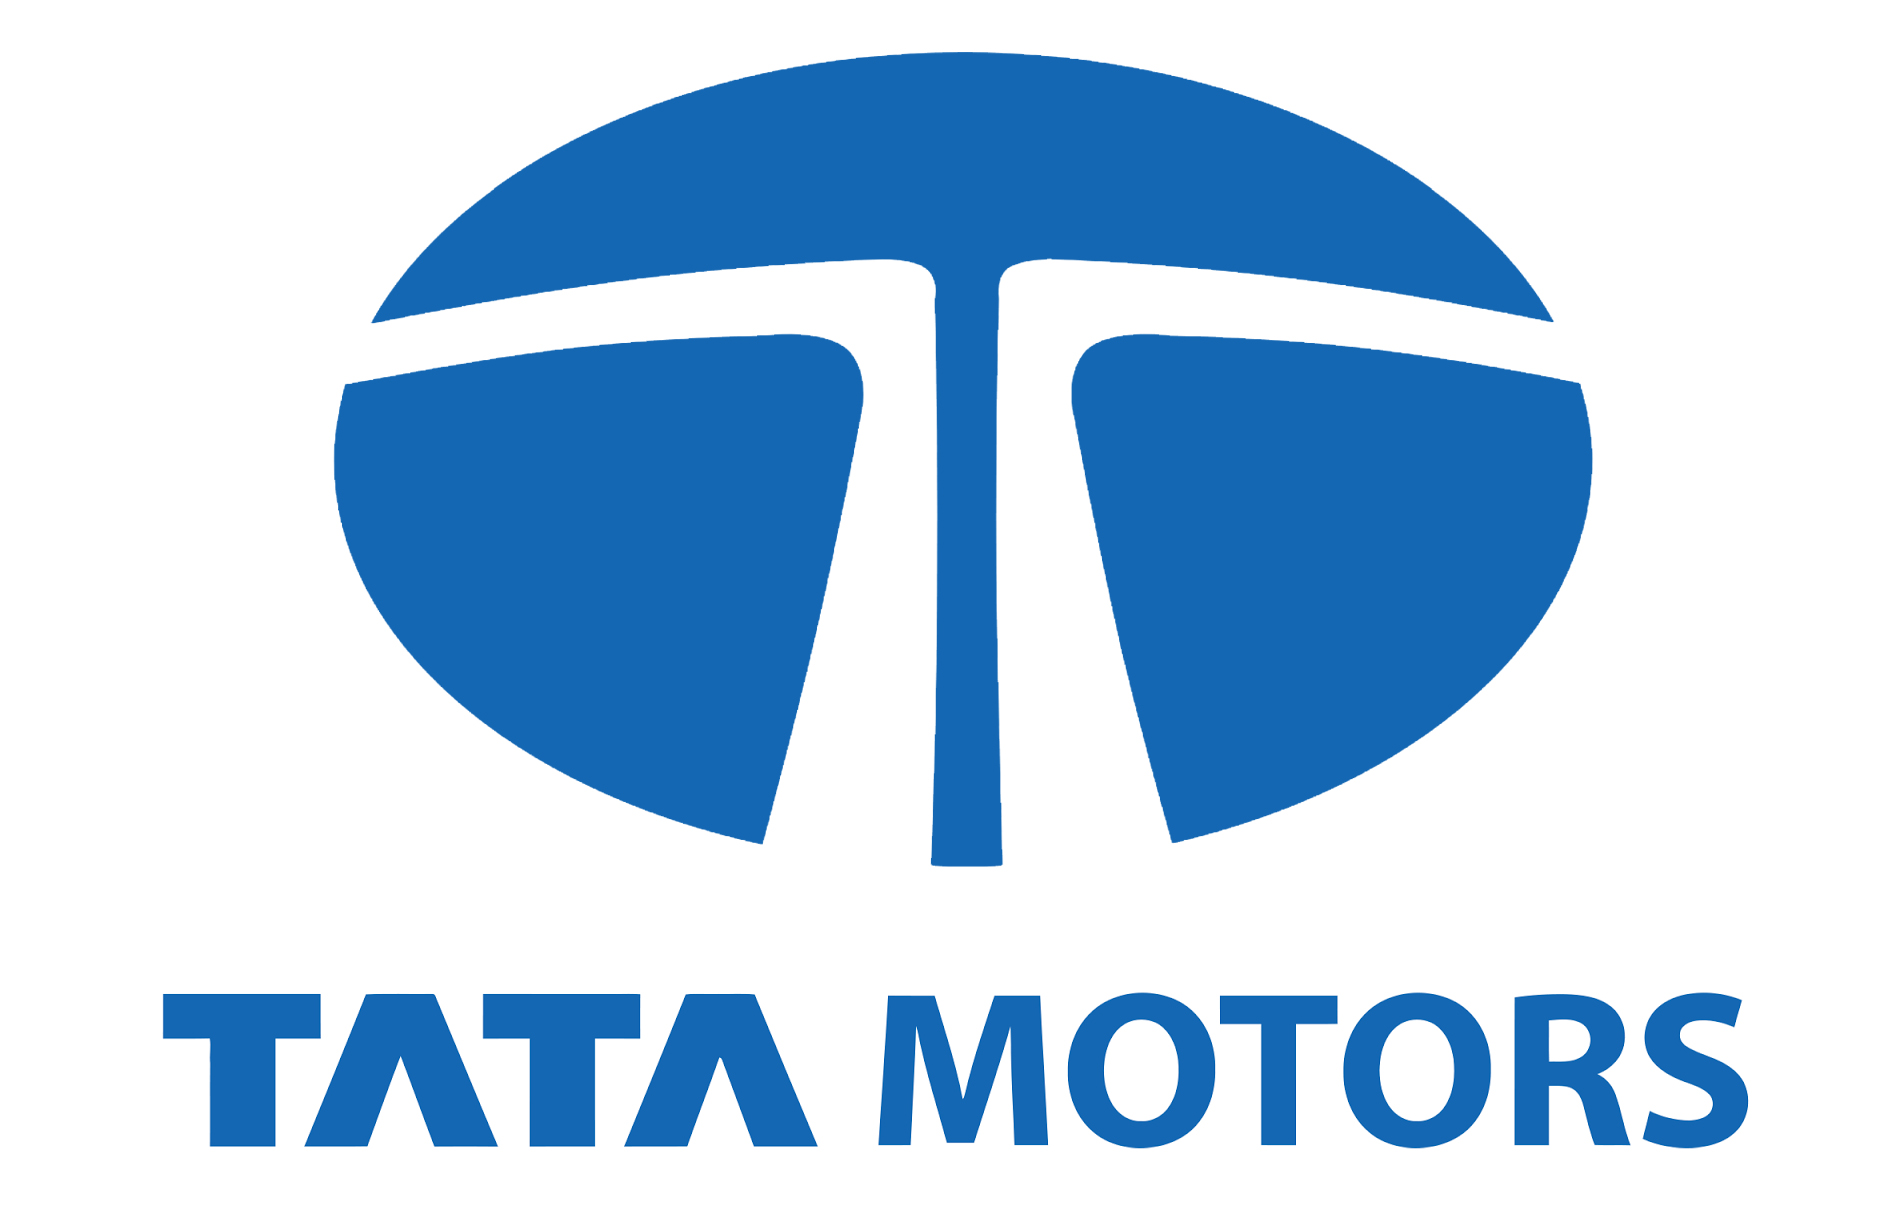 Tata Motors Cars Showroom - Bhasin Motors|Show Room|Automotive